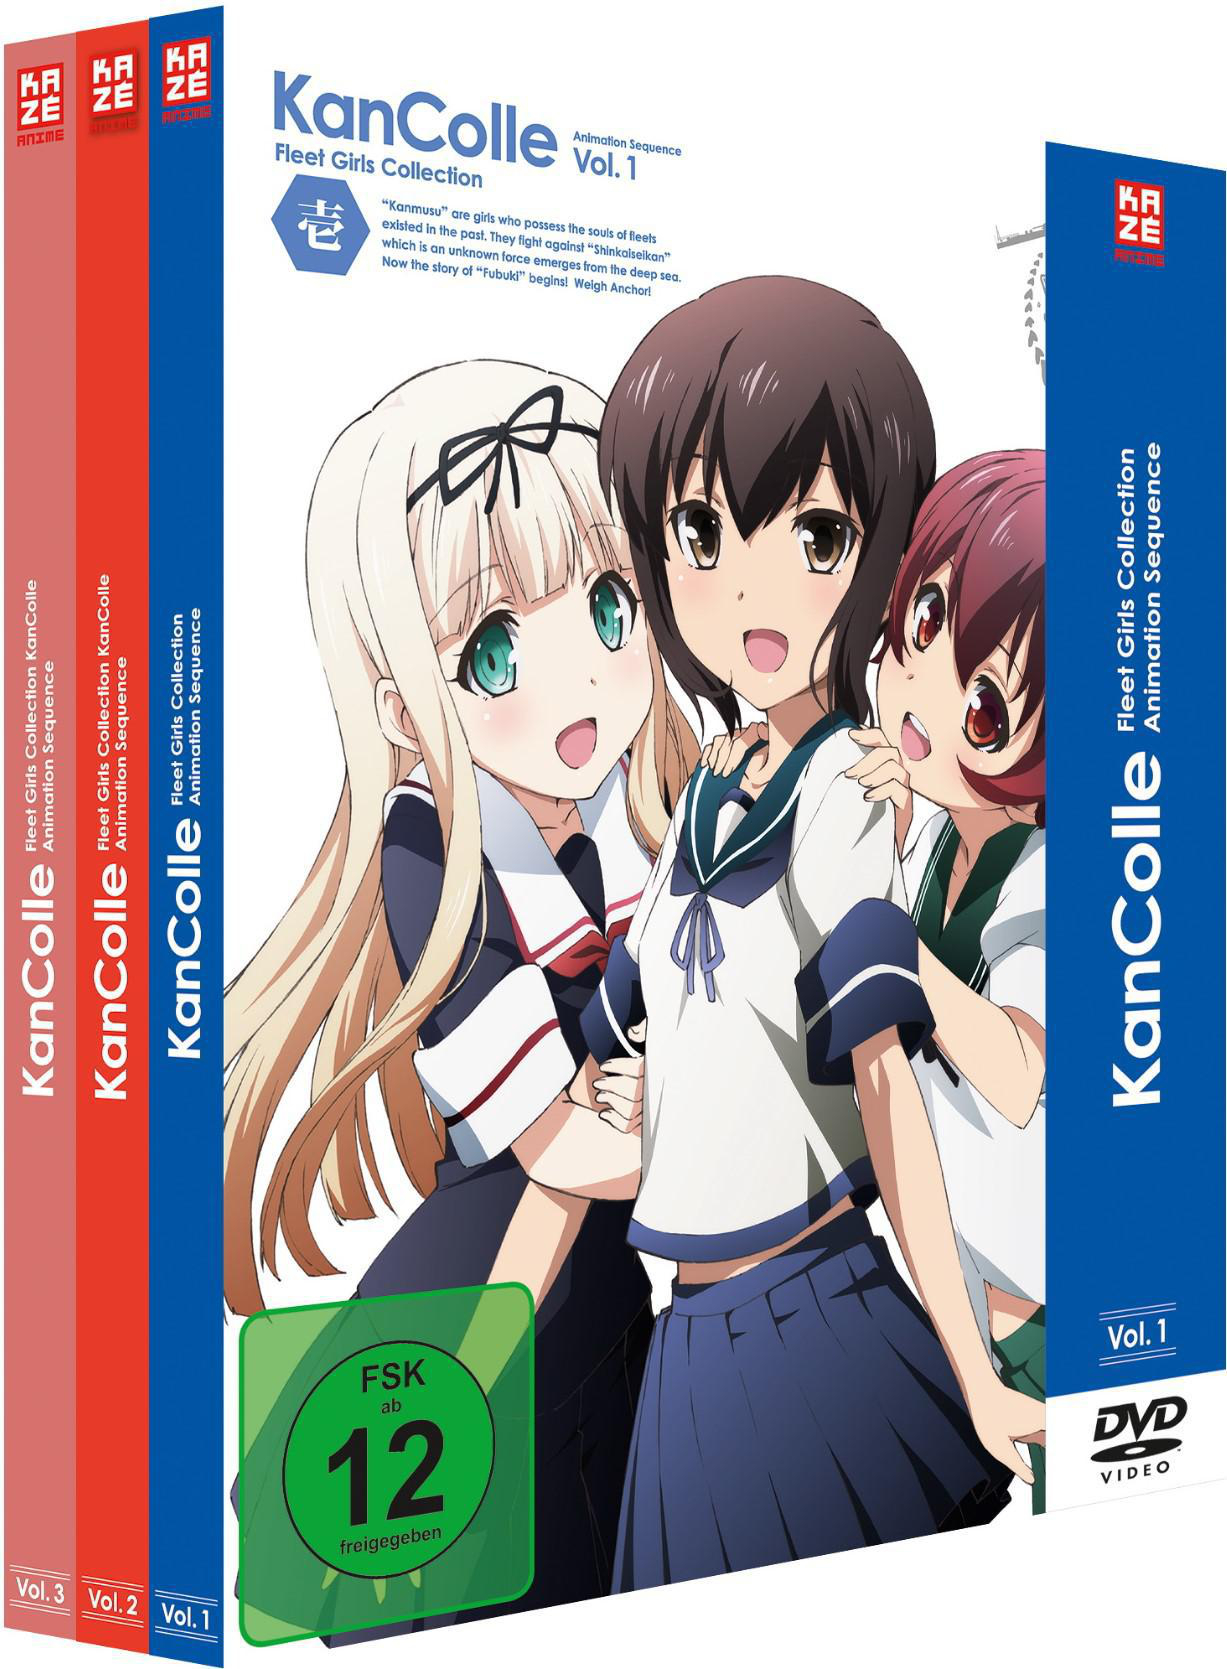 KanColle Fleet Collection Gesamtausgabe – DVD – Girls